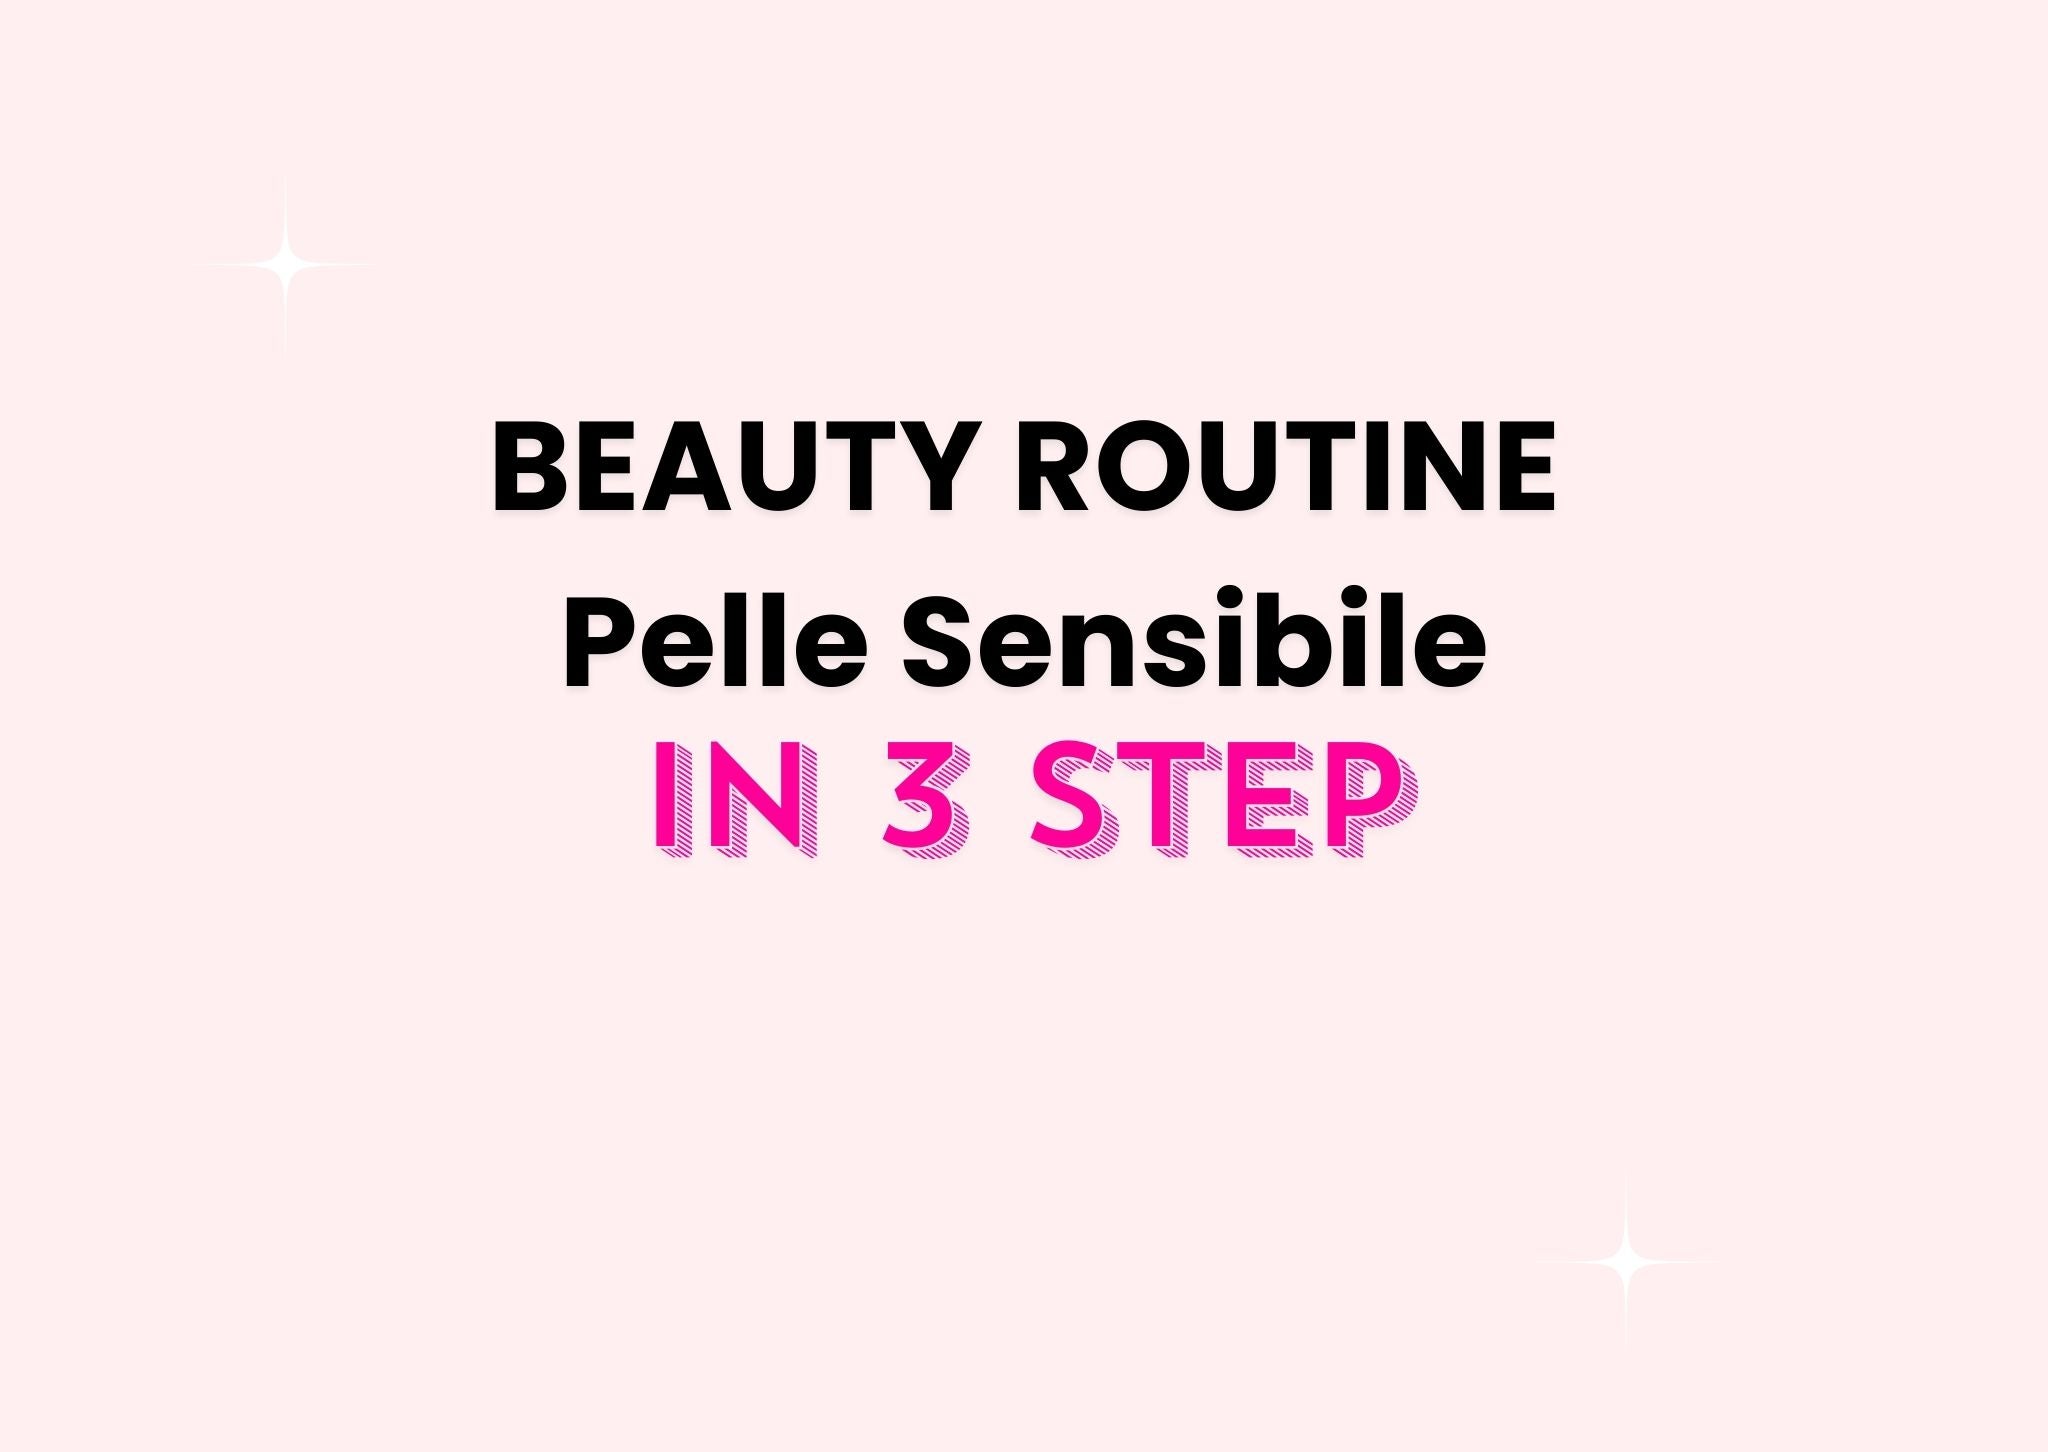 Beauty Routine per pelle sensibile in 3 step